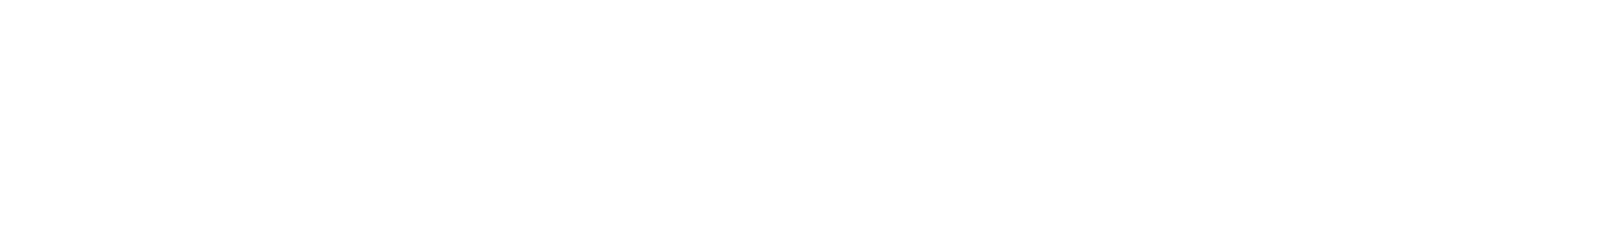 Glatfelter
 Logo groß für dunkle Hintergründe (transparentes PNG)